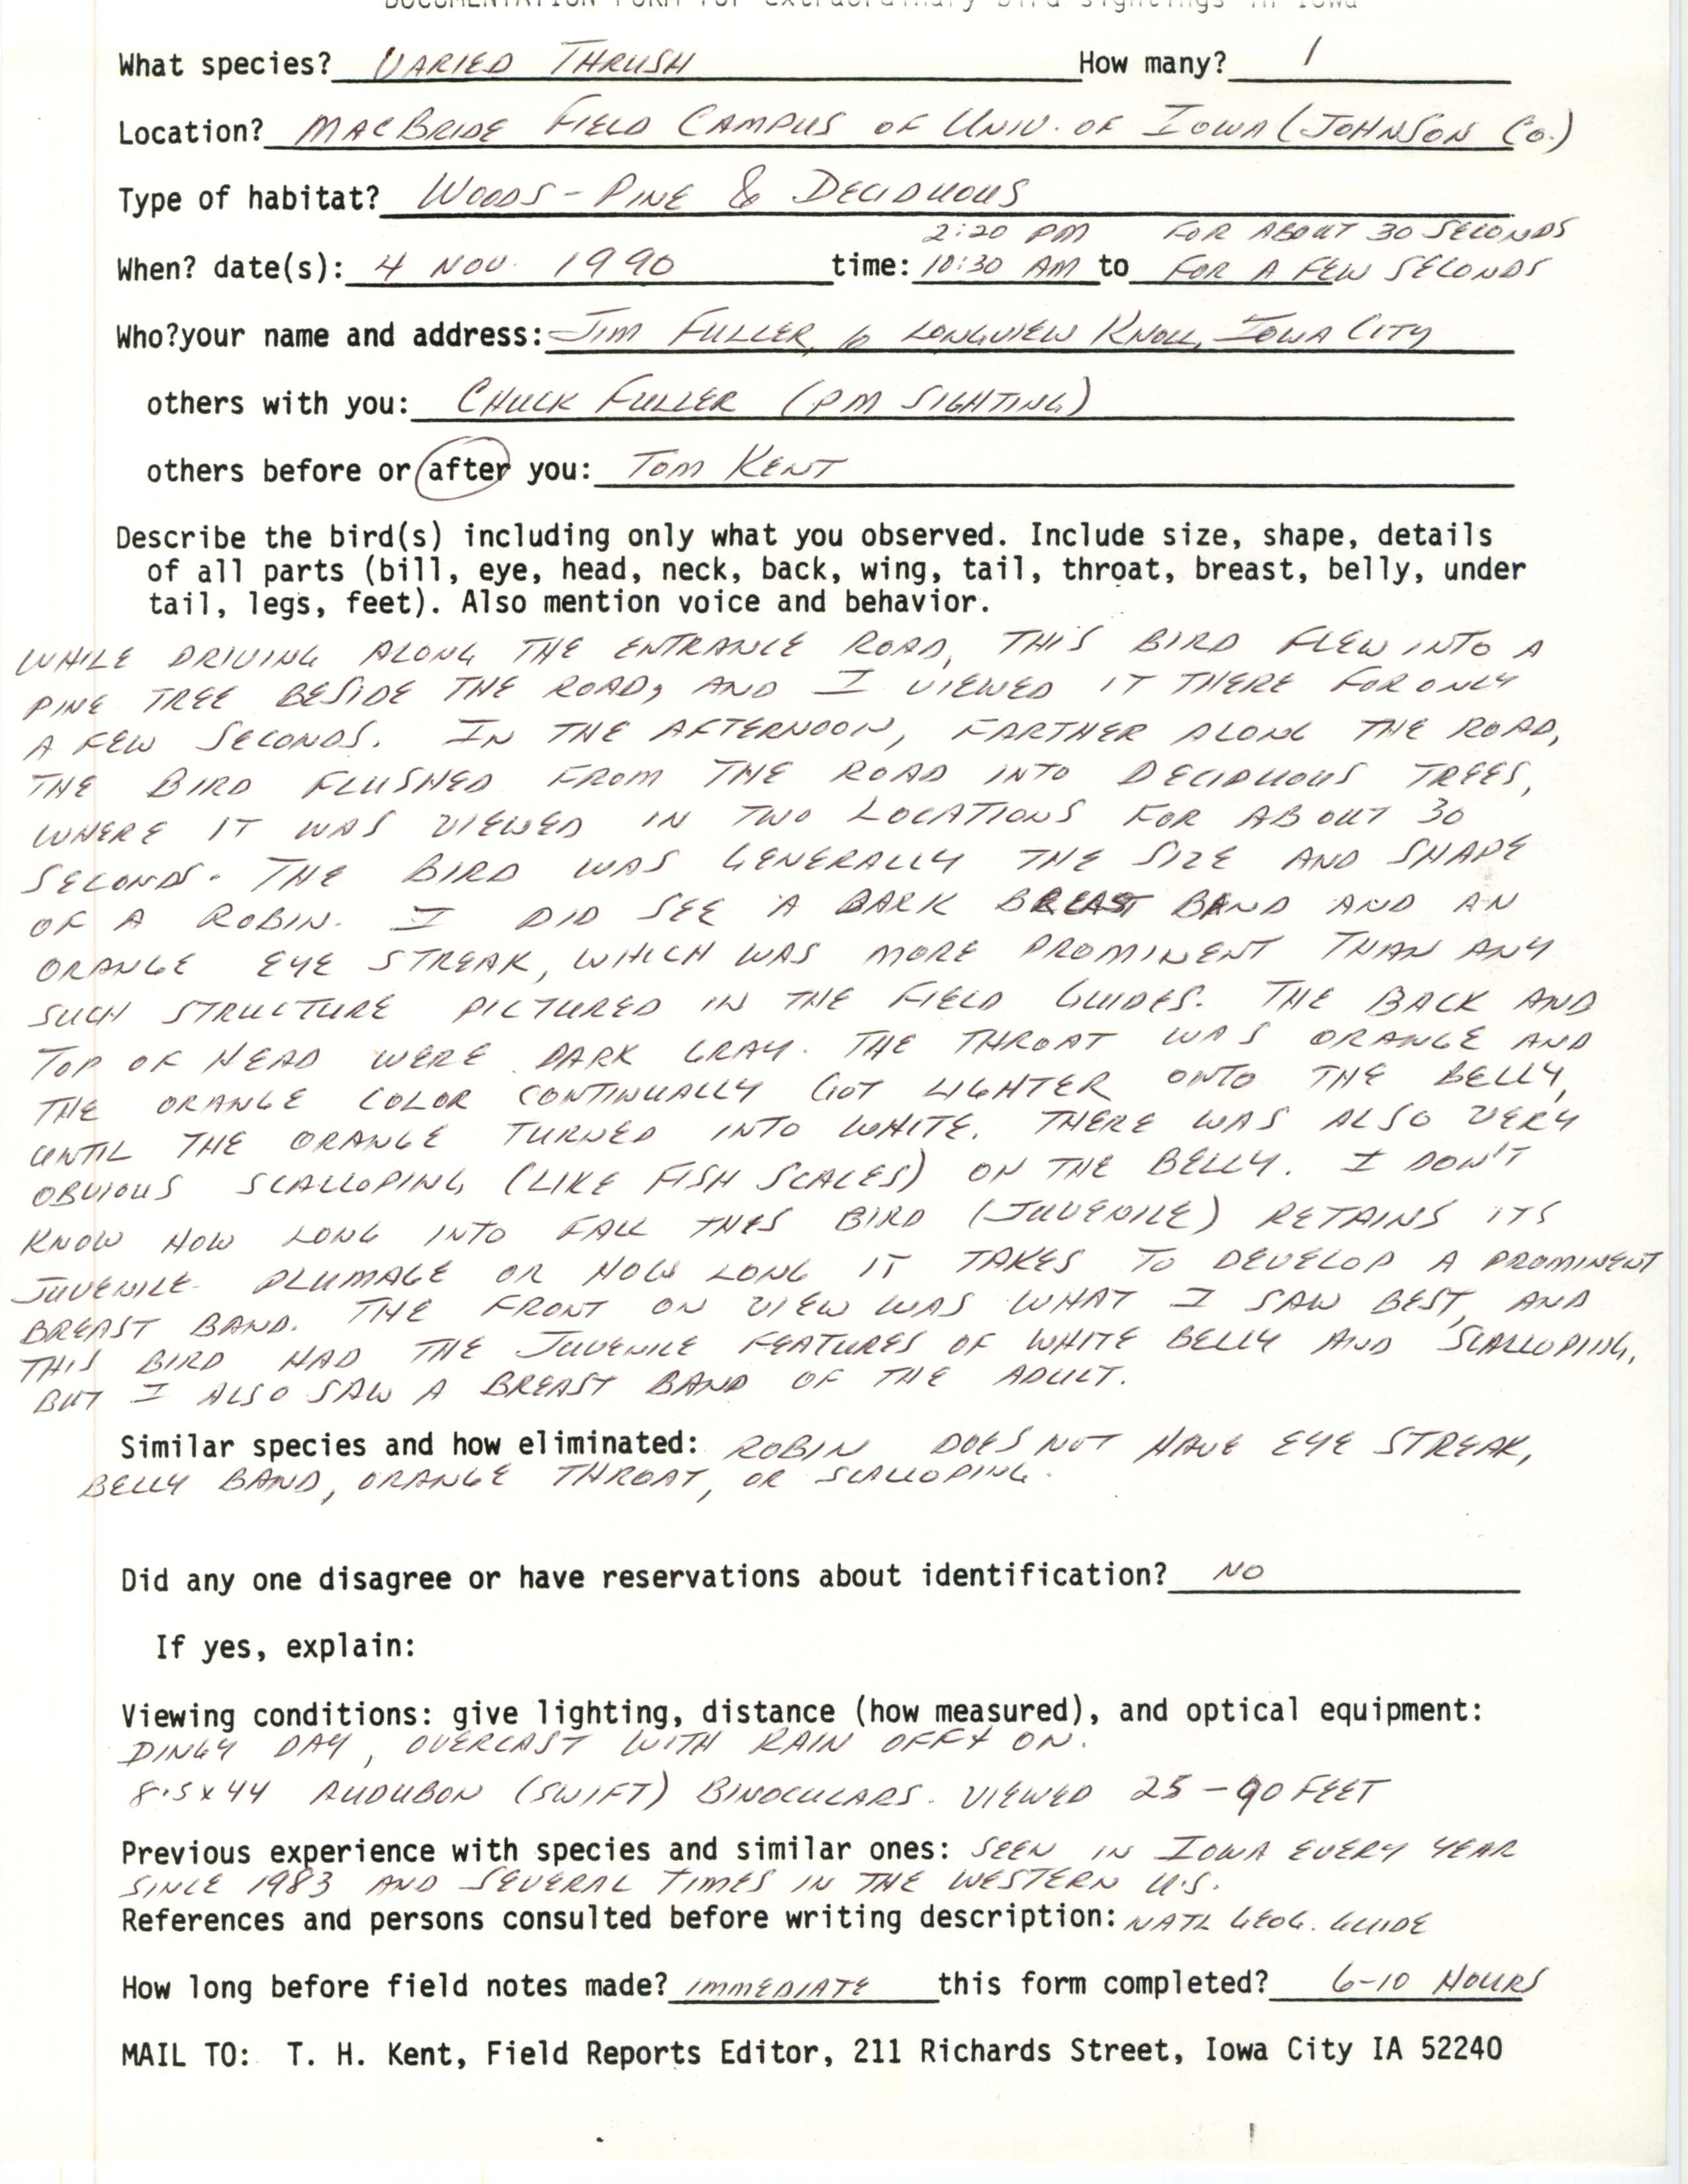 Rare bird documentation form for Varied Thrush at MacBride Nature Recreation Area, 1990